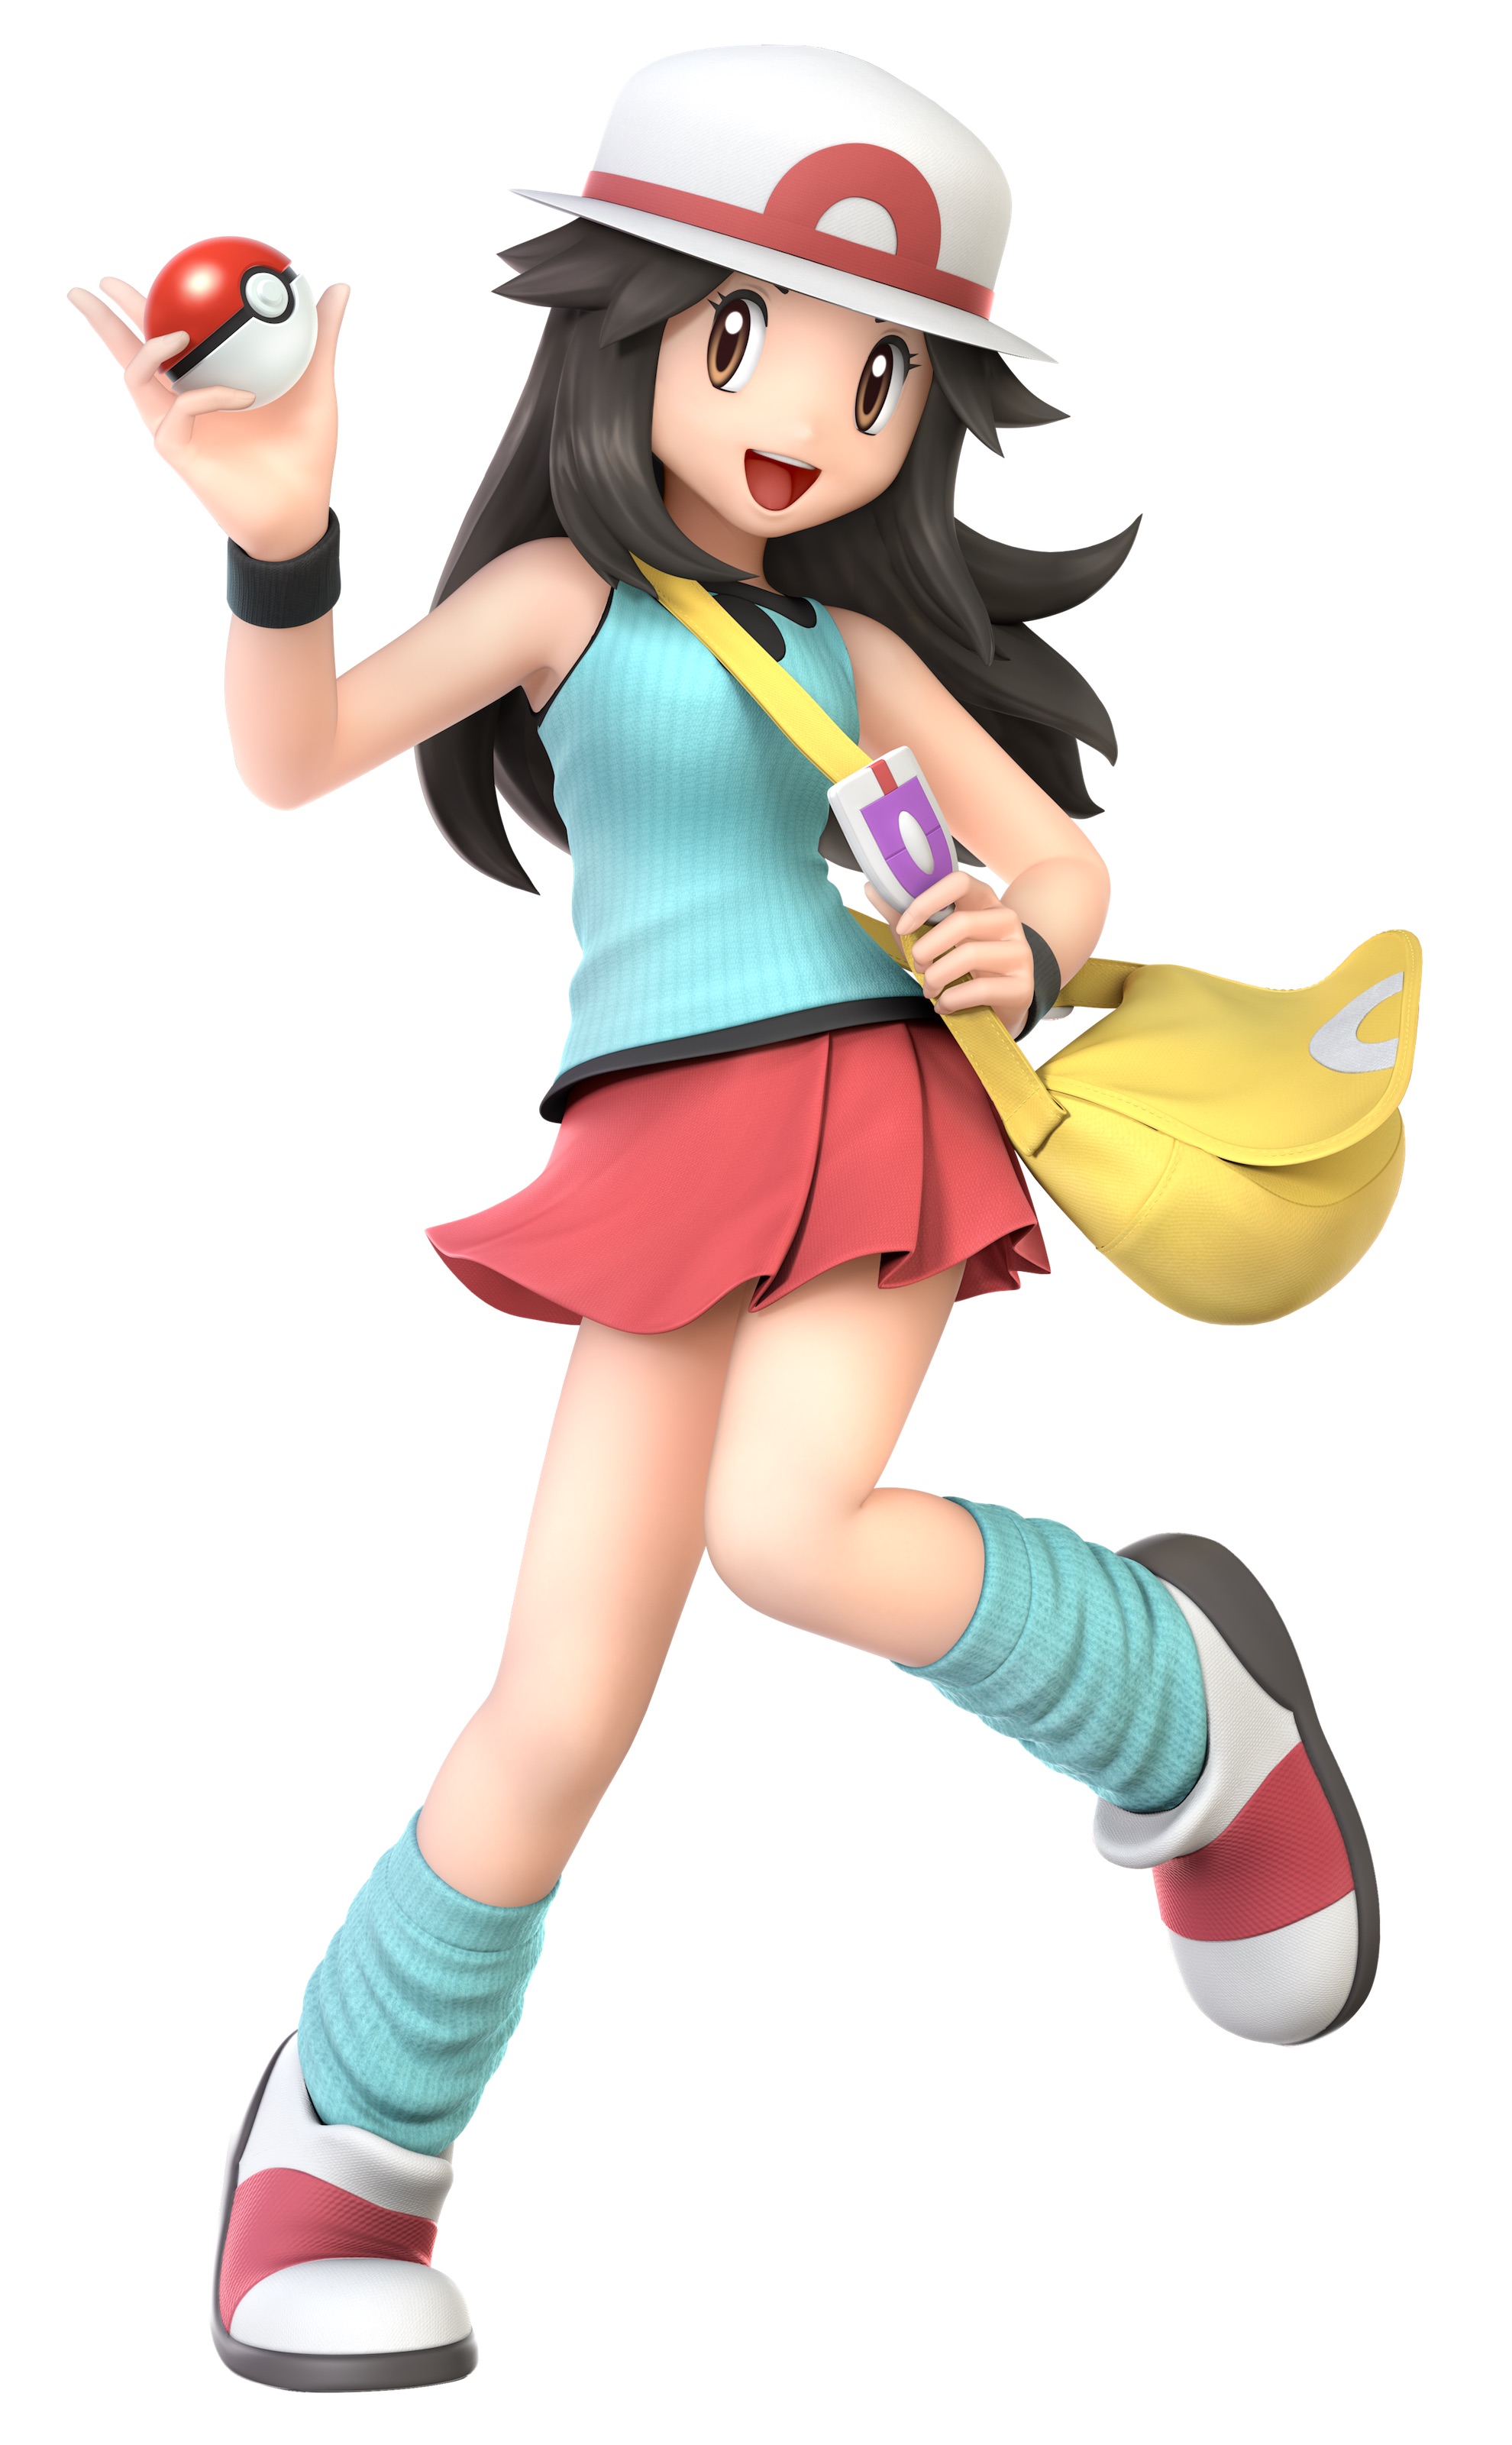 Female Pokémon Trainer Super Smash Bros. Ultimate Character Render